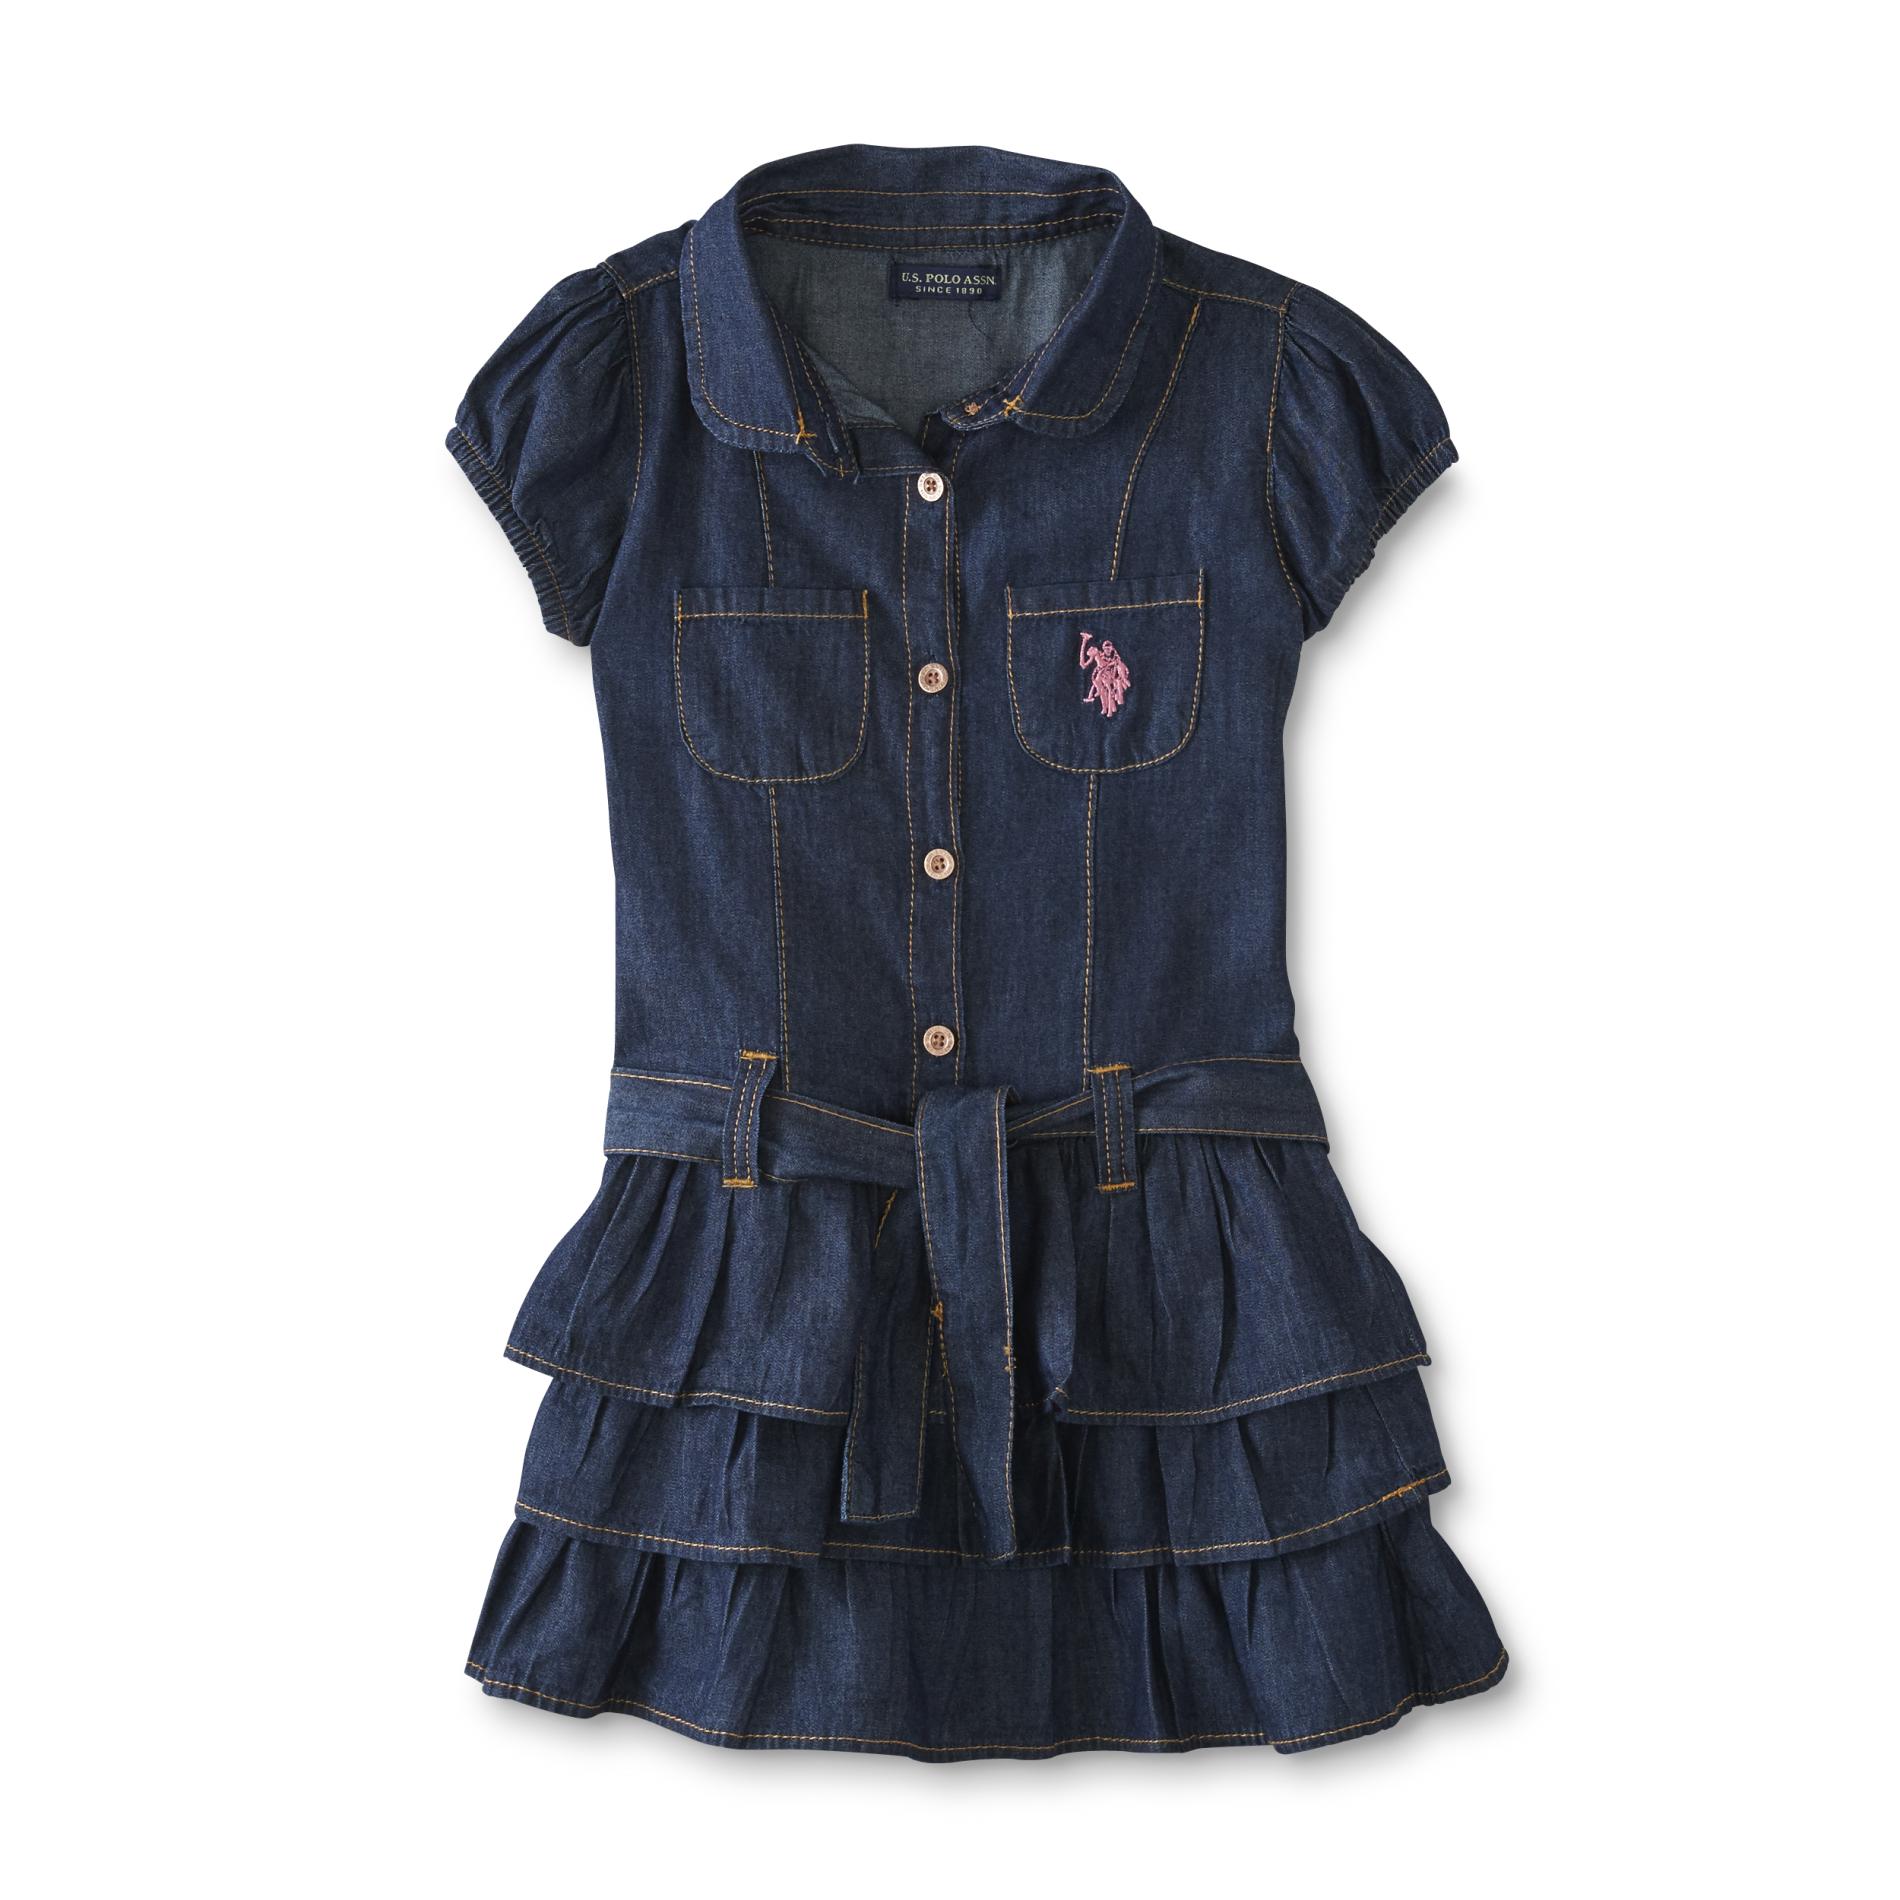 U.S. Polo Assn. Infant & Toddler Girls' Chambray Dress